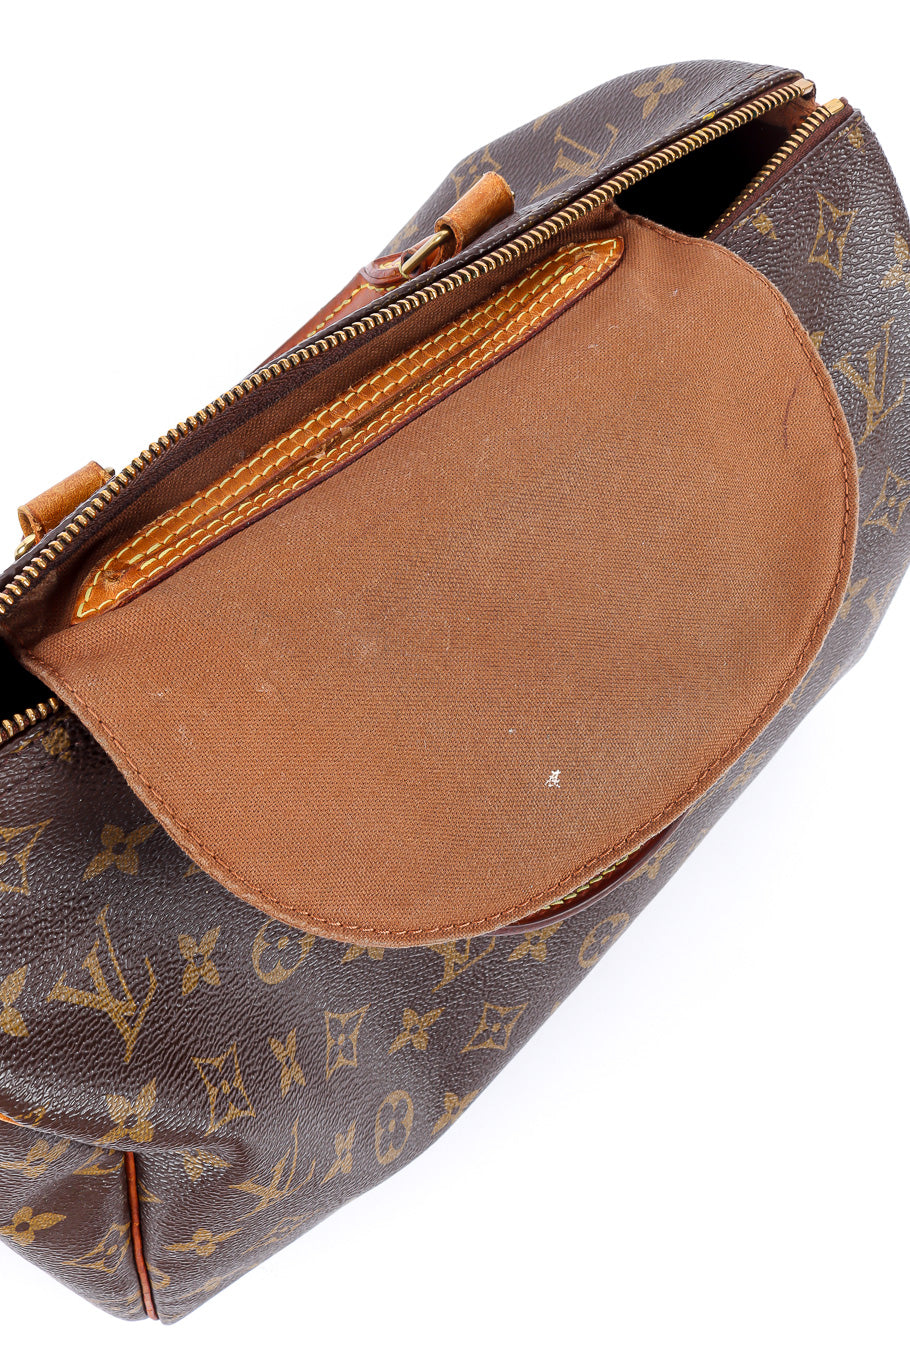 Vintage Louis Vuitton Classic Monogram Speedy 30 Bag II inner pocket closeup @Recessla